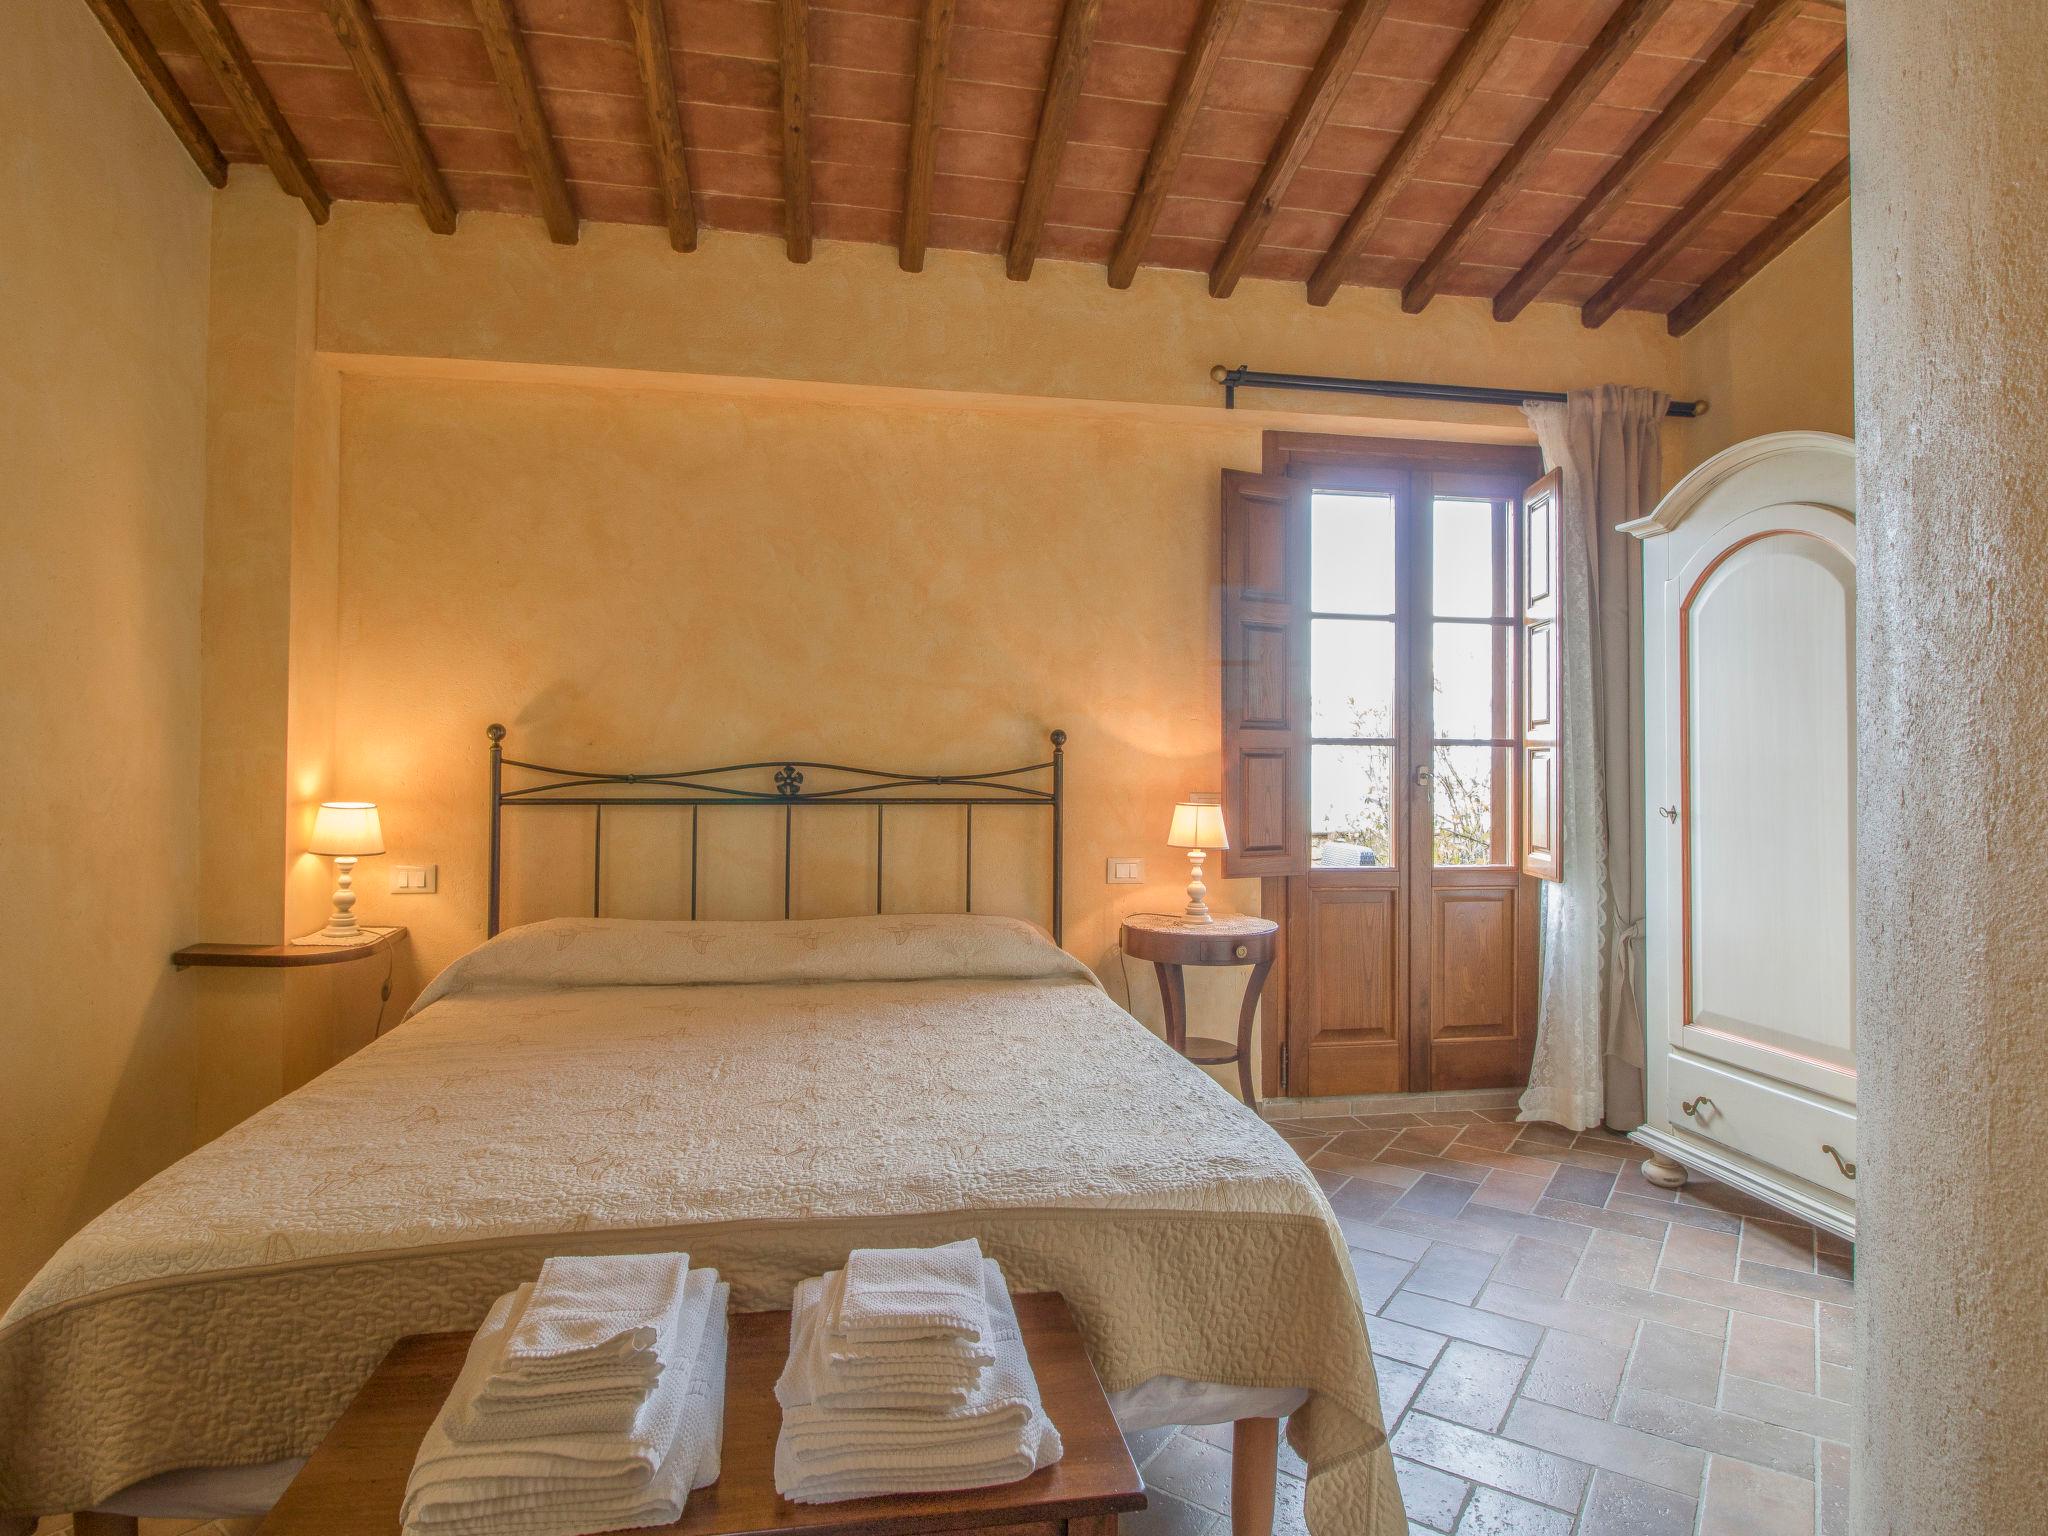 Foto 14 - Haus mit 5 Schlafzimmern in Civitella in Val di Chiana mit privater pool und terrasse